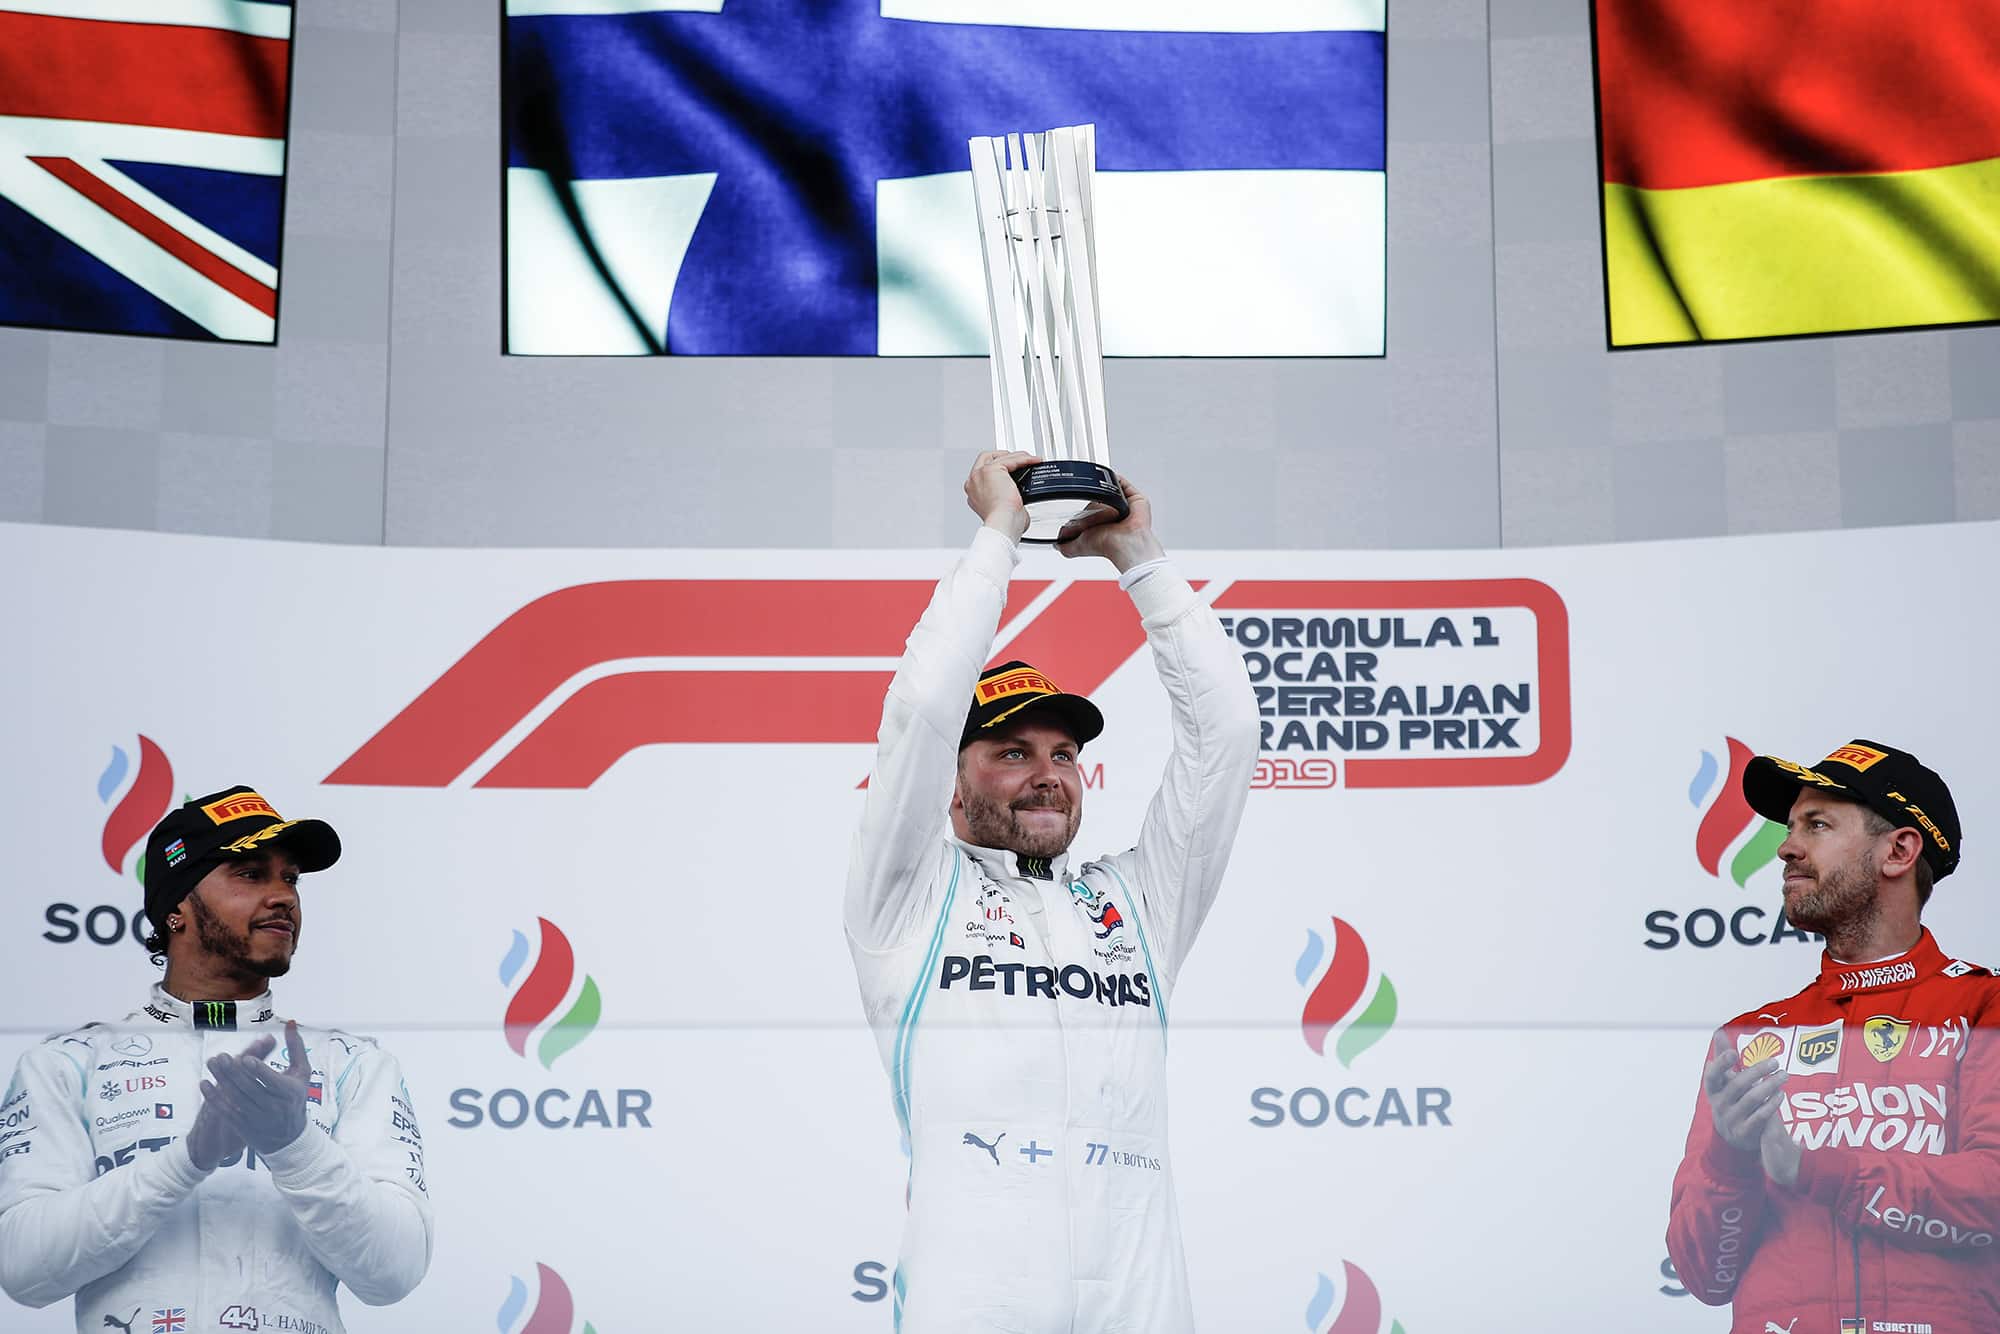 Valtteri Bottas on the top step after winning the 2019 Azerbaijan Grand Prix